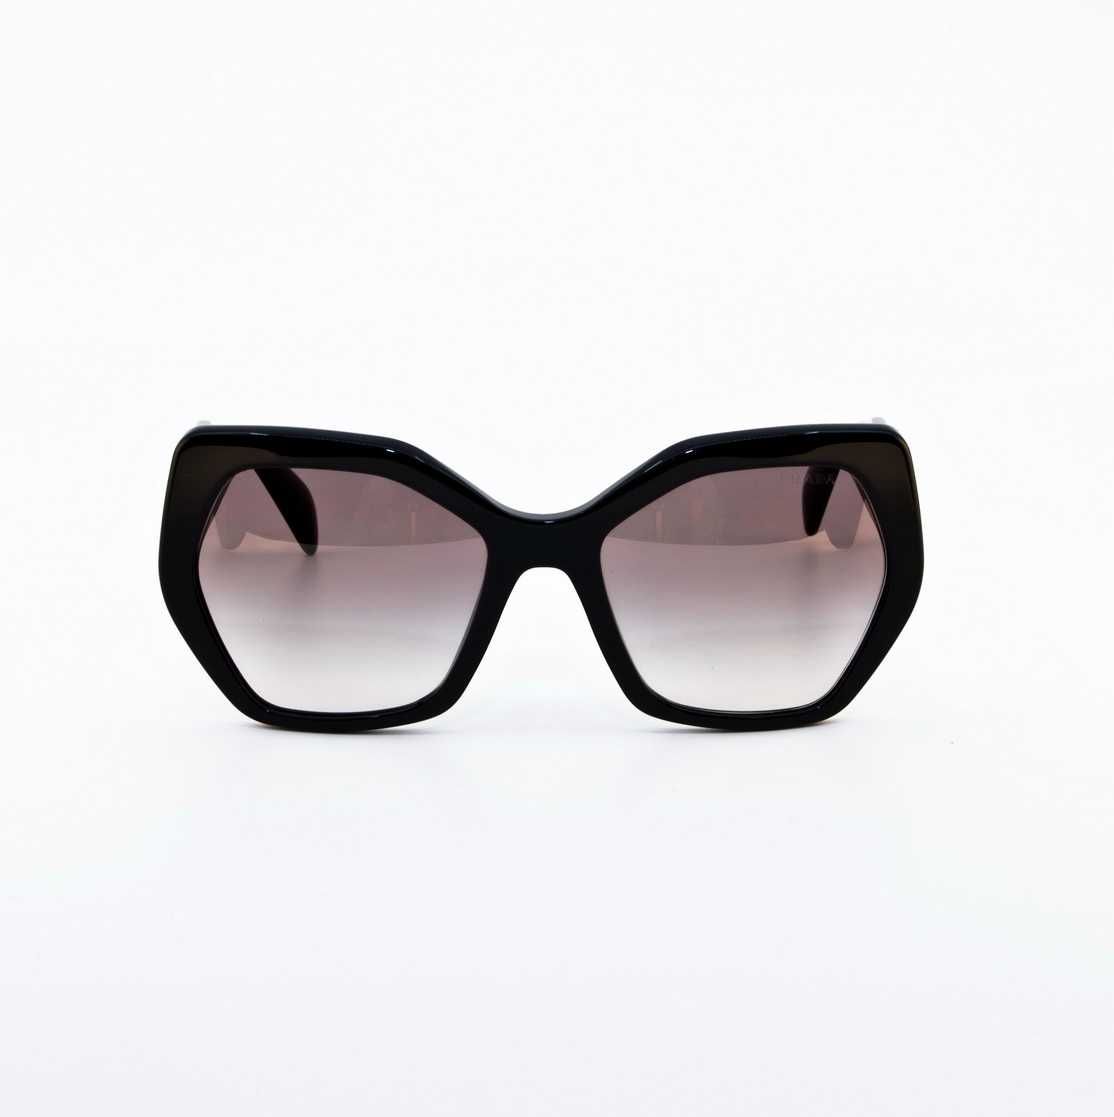 Prada очки новые Оригинал окуляри Retail 520$